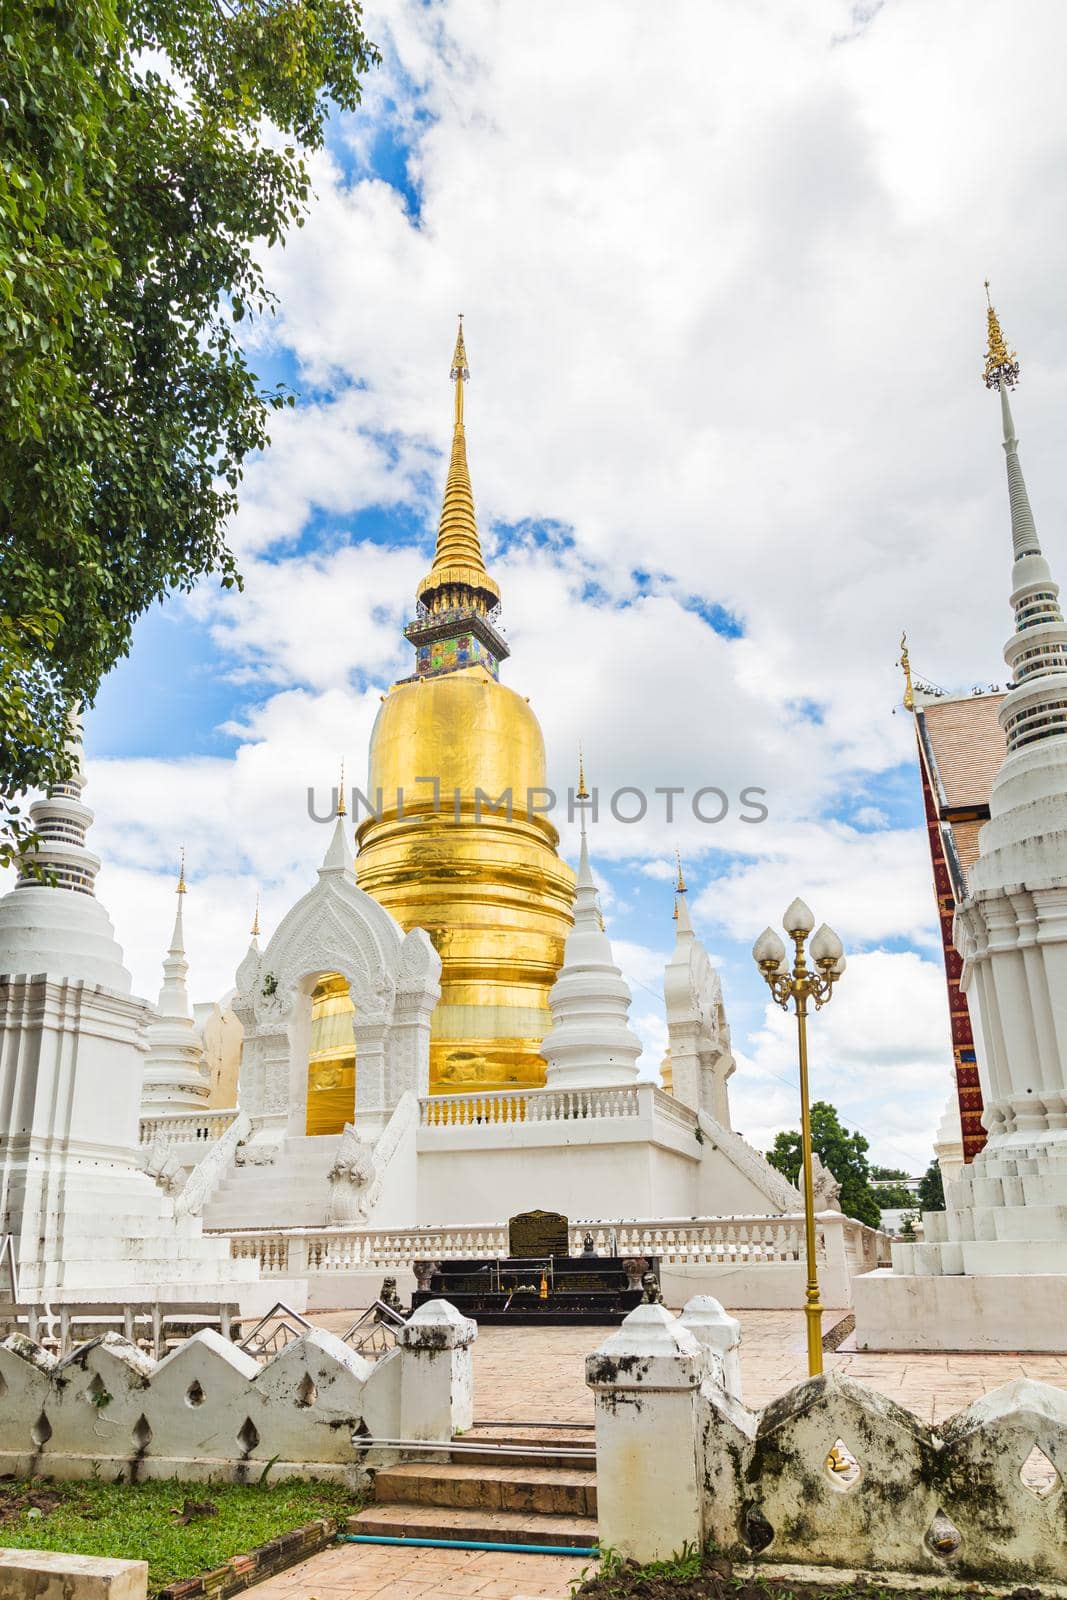 Suan Dok temple, Wat Suan Dok (monastery) in Chiang Mai, Thailand by Gamjai